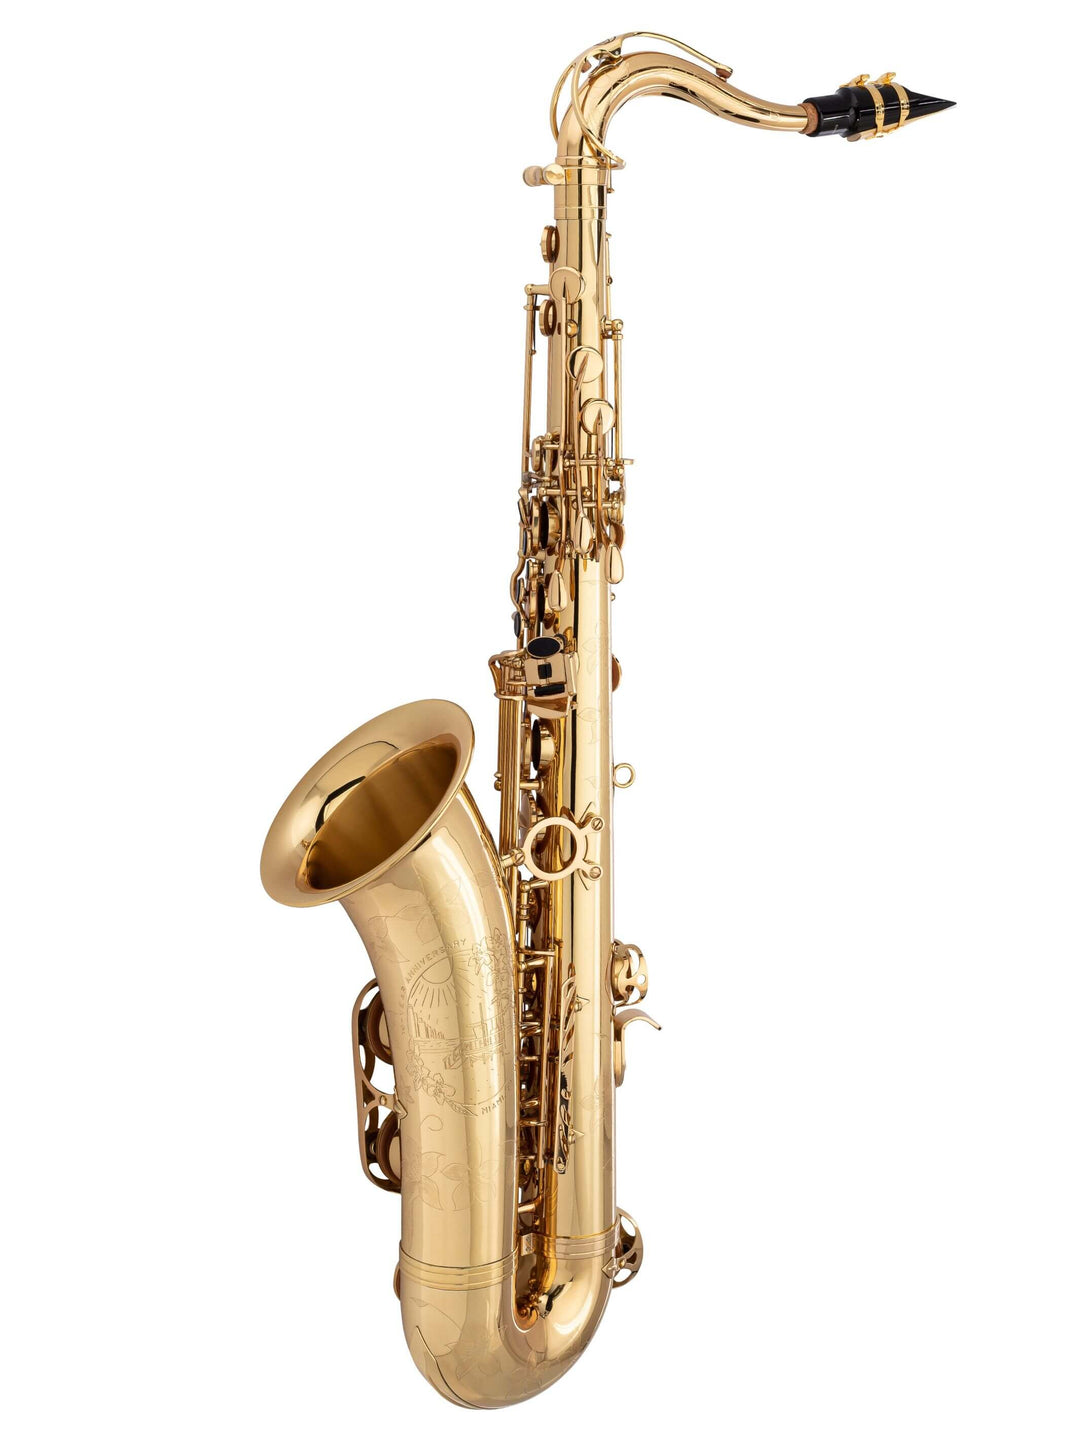 TS-860 Tenor Saxophone Side View 2#finish_brass